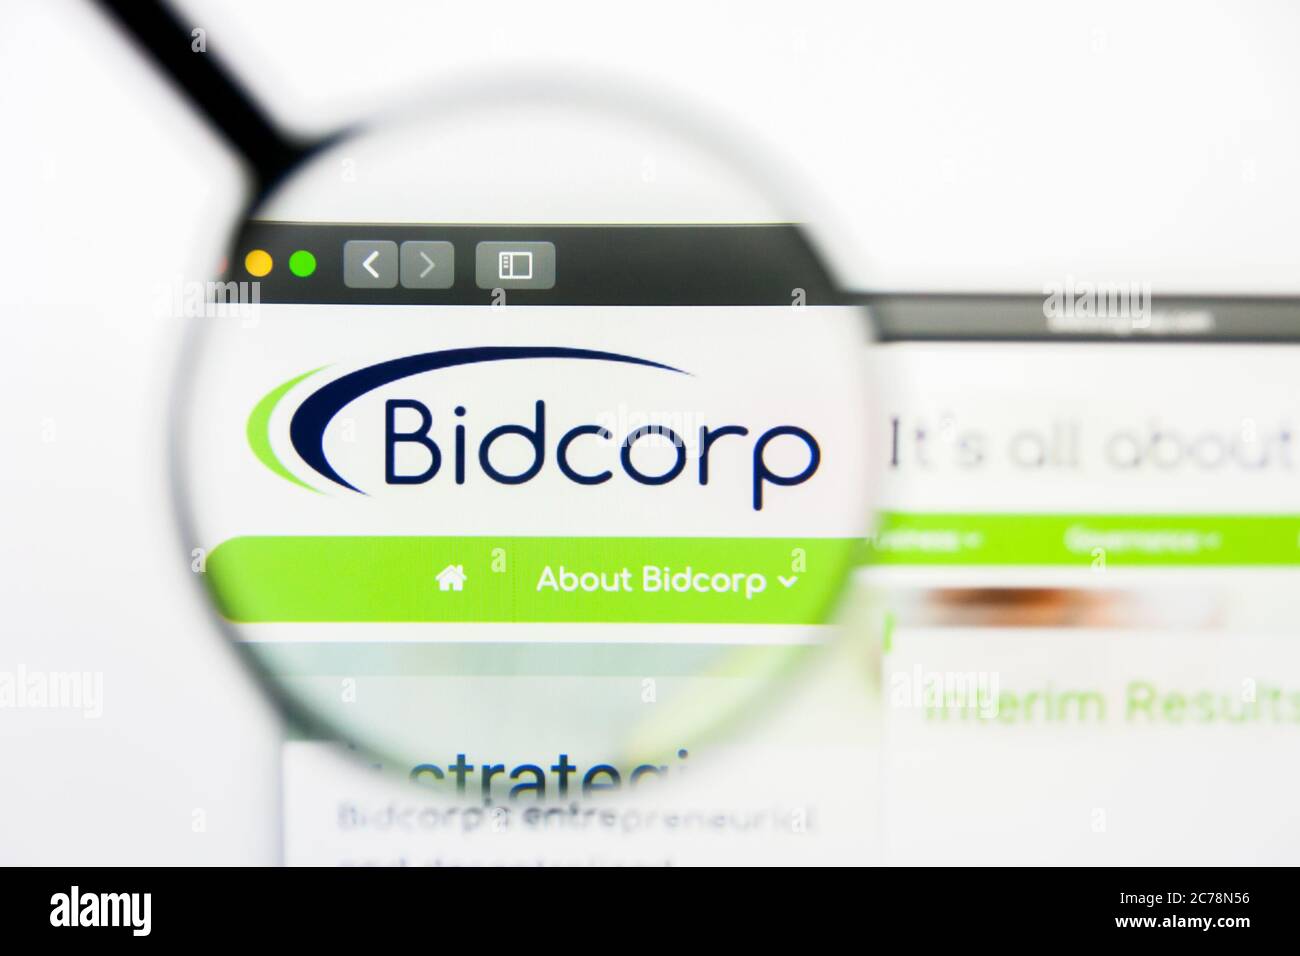 Los Angeles, California, USA - 23 March 2019: Illustrative Editorial of Bid Corp. website homepage. Bid Corp. logo visible on display screen. Stock Photo